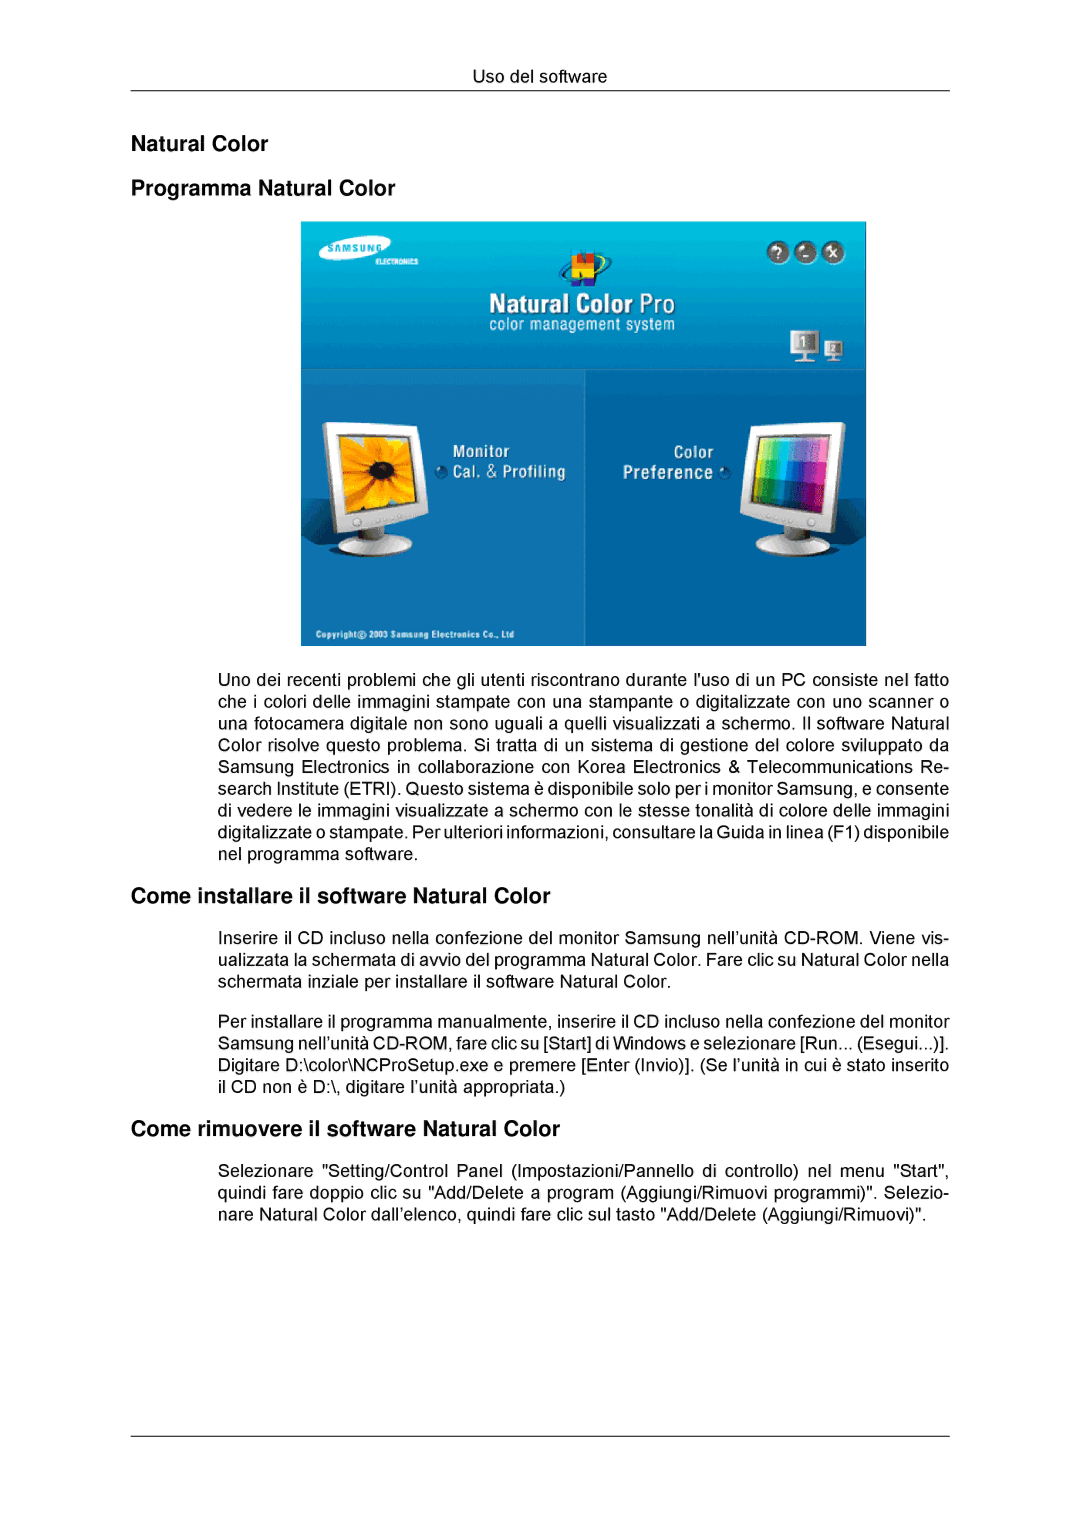 Samsung LS23MYYKBBA/EN, LS23MYYKBB/EDC Natural Color Programma Natural Color, Come installare il software Natural Color 